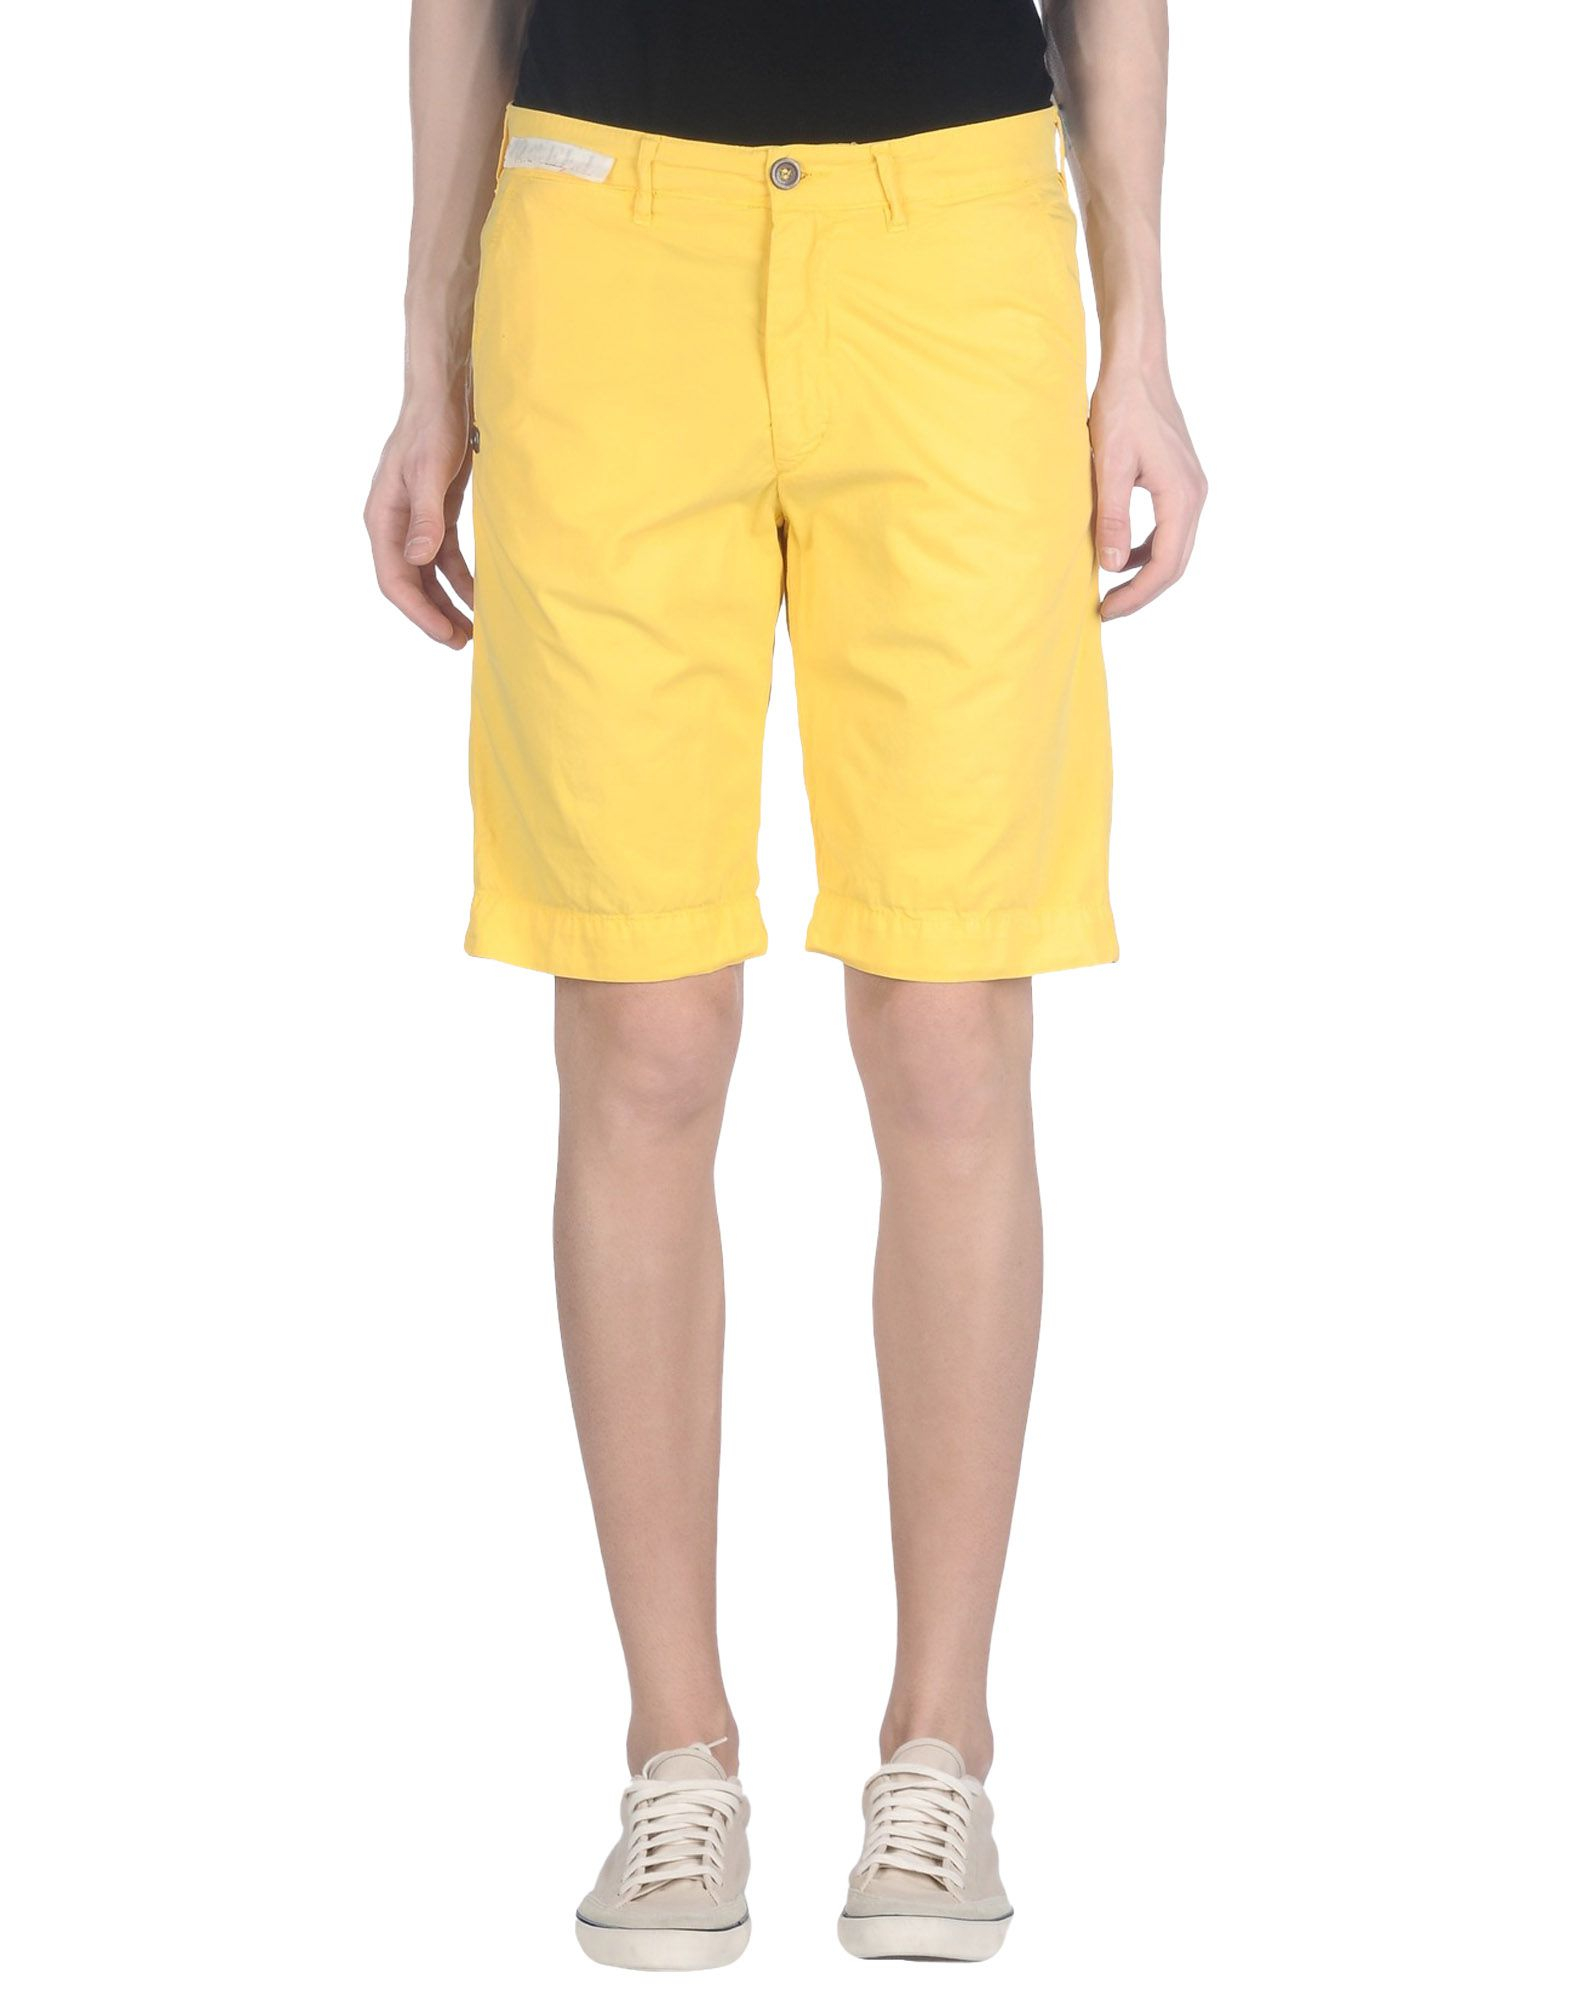 Lyst 40Weft Bermuda Shorts in Yellow for Men